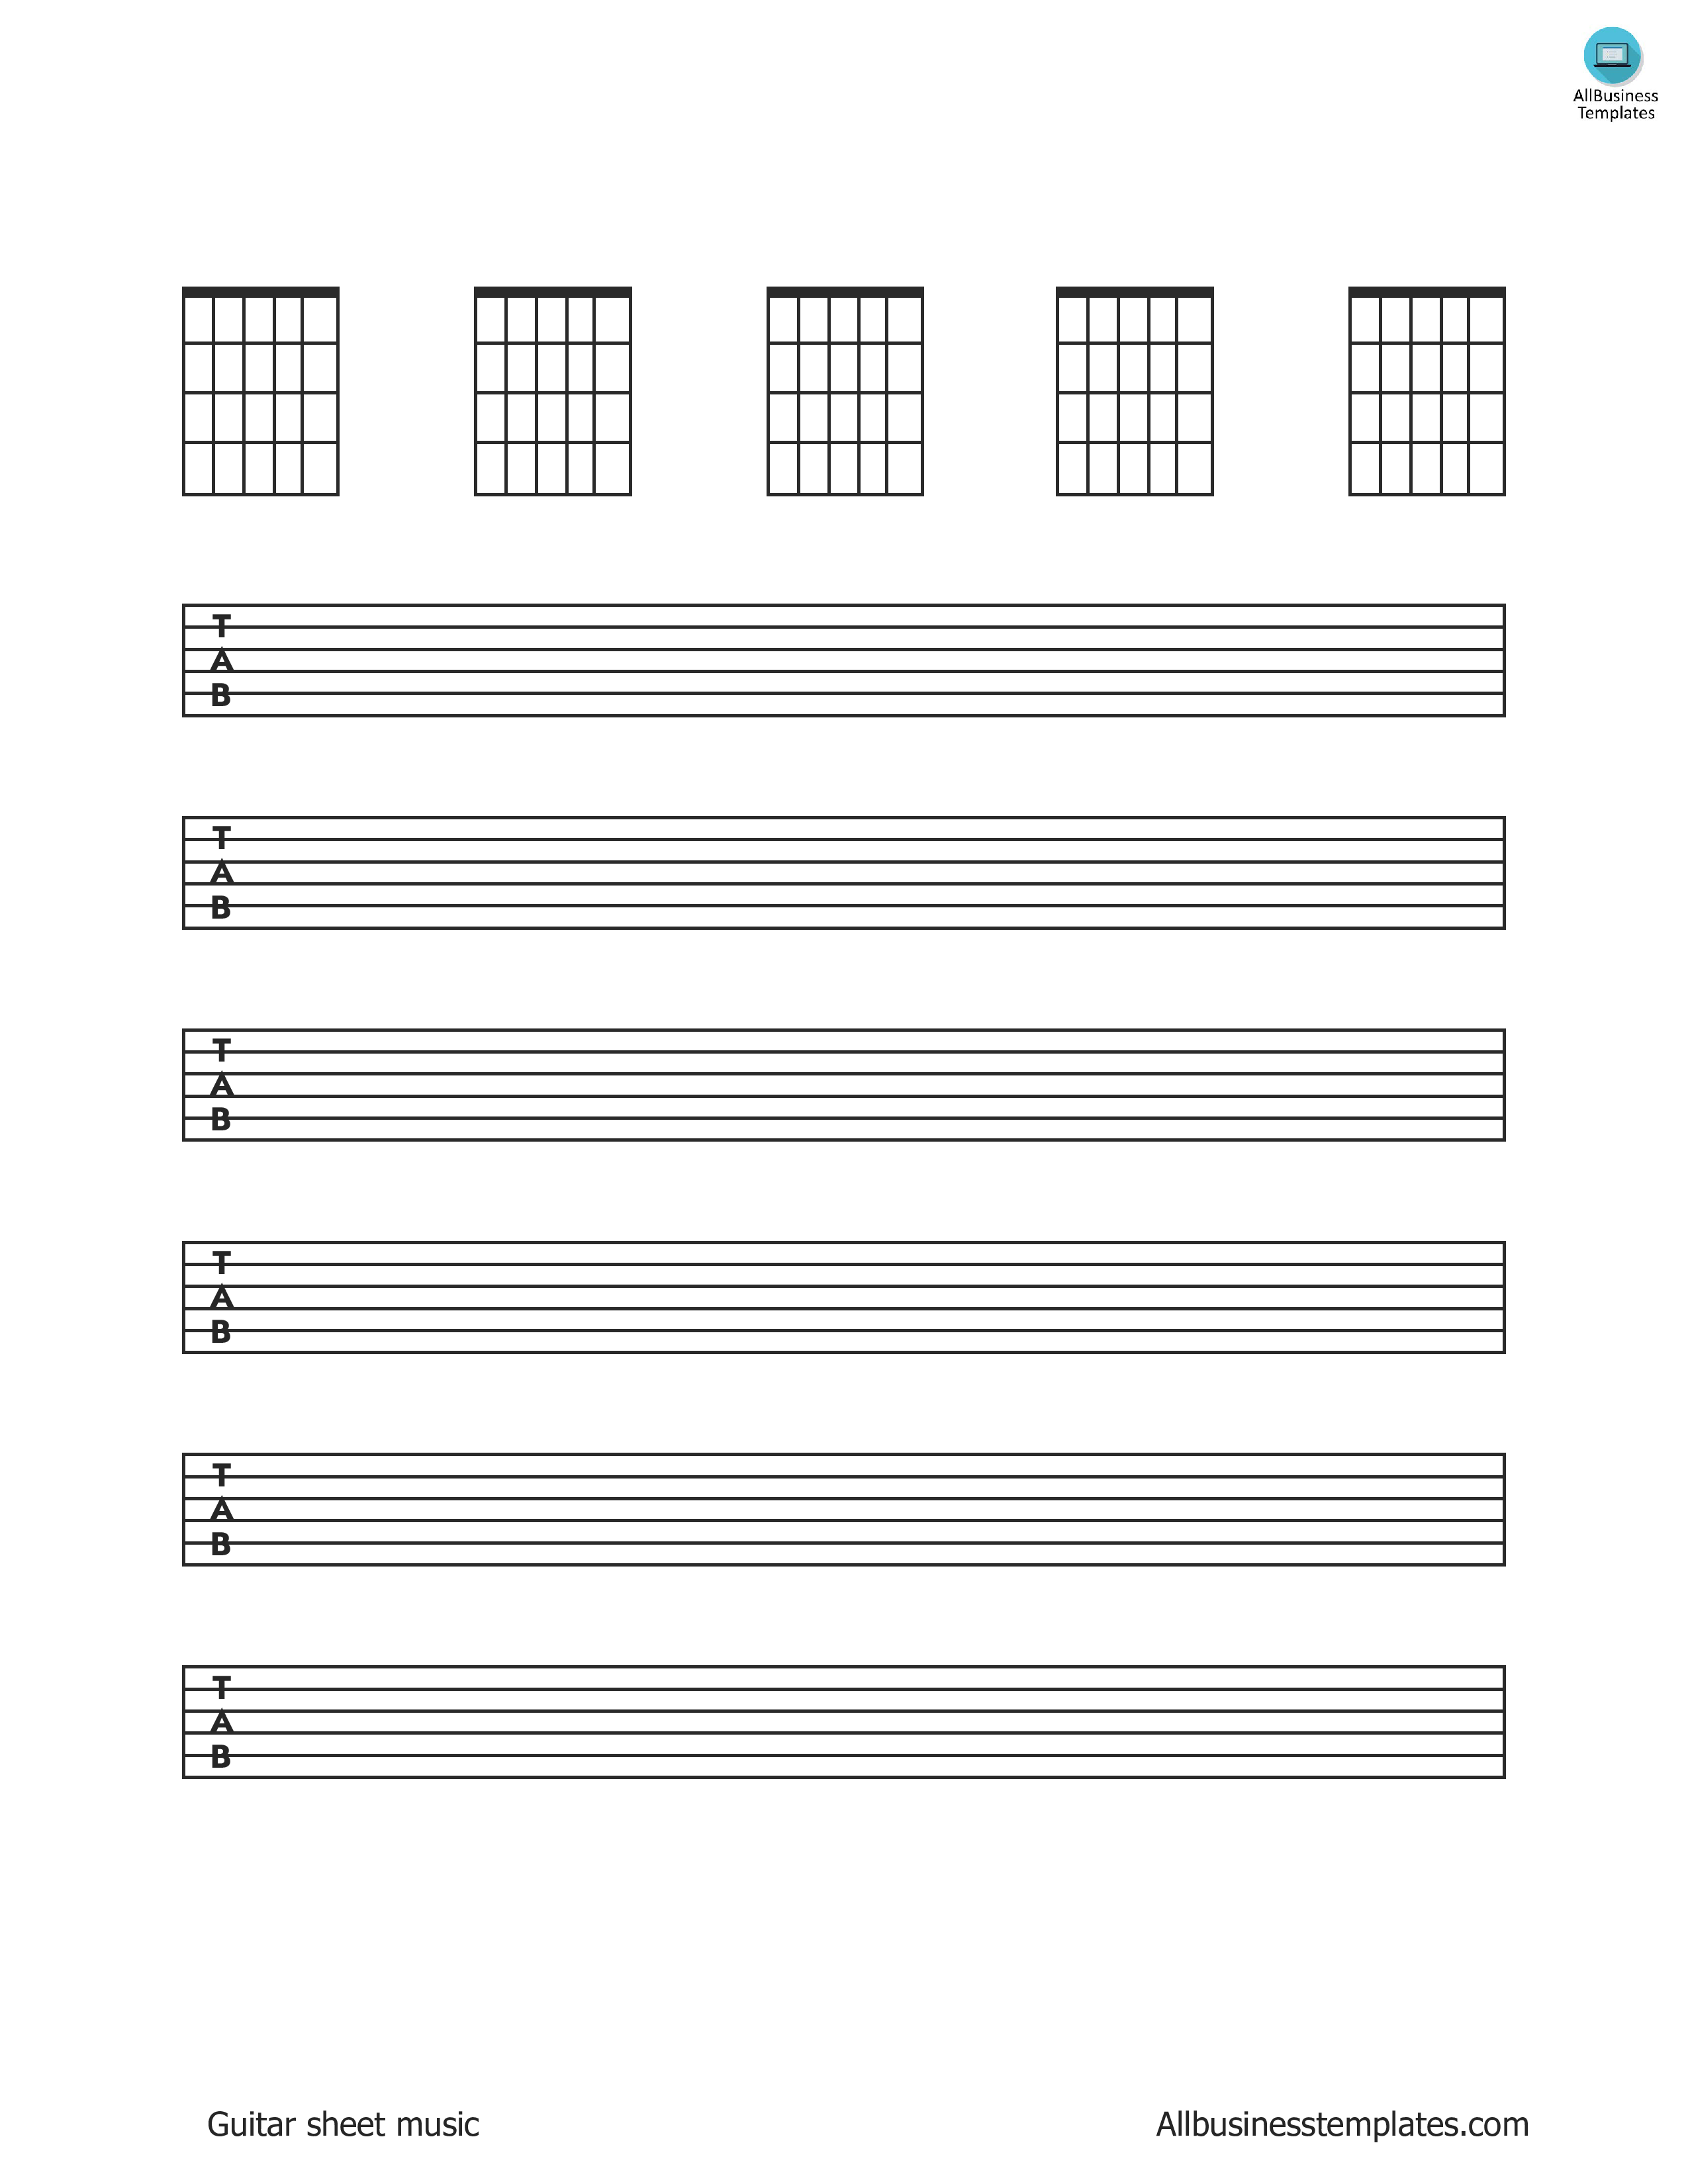 Guitar Sheet Music sheets main image